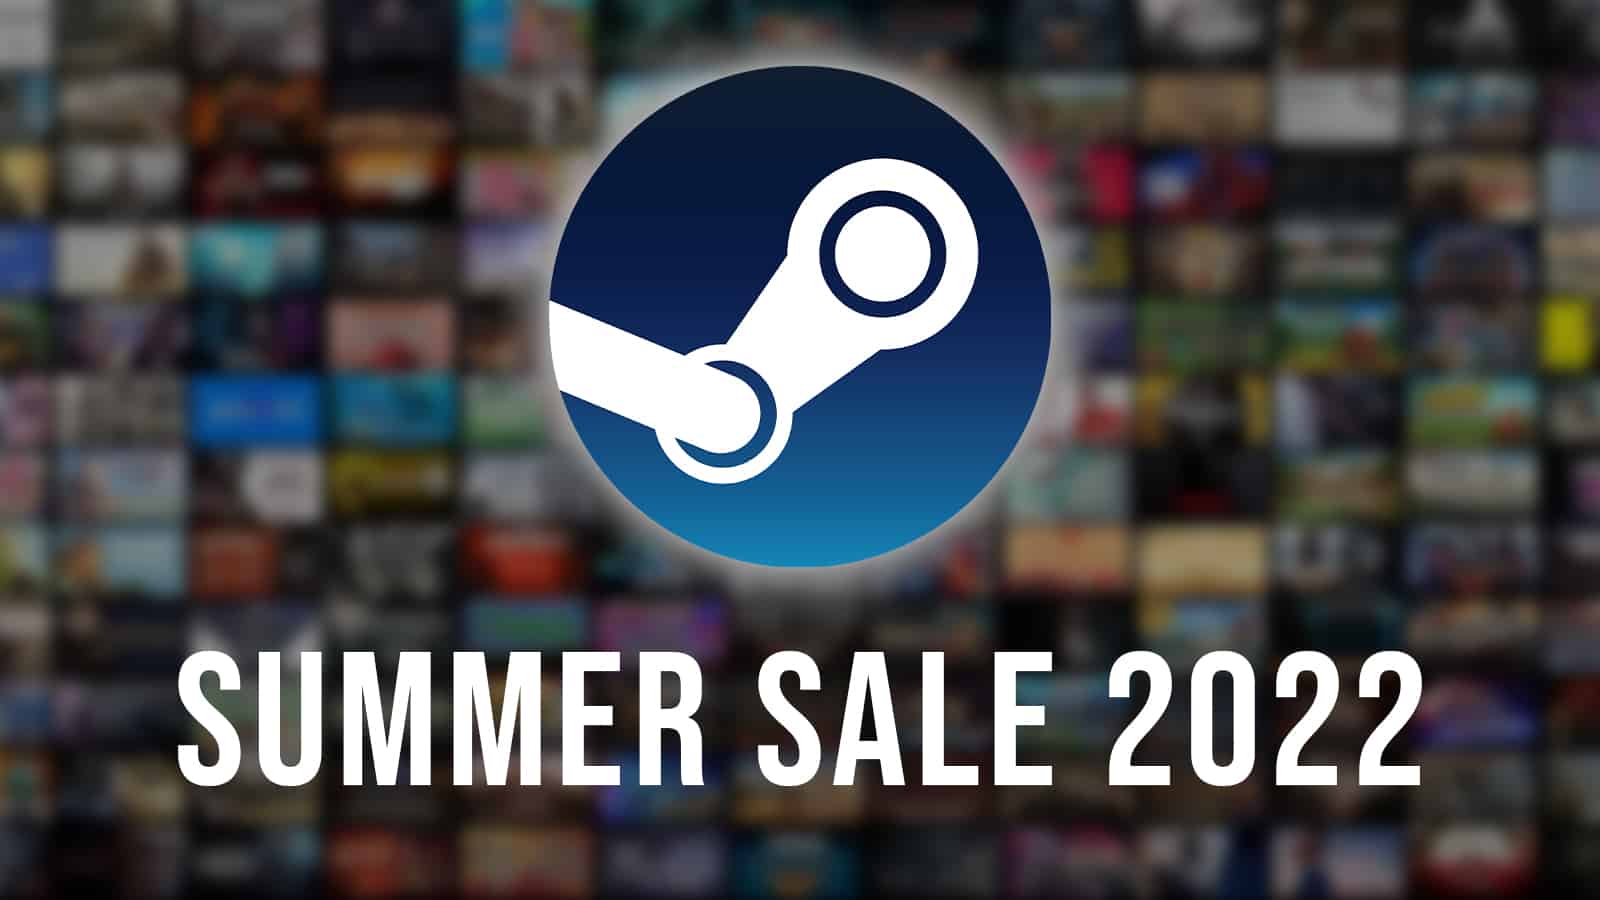 Steam News - The Steam Summer Sale is on now! - Steam News